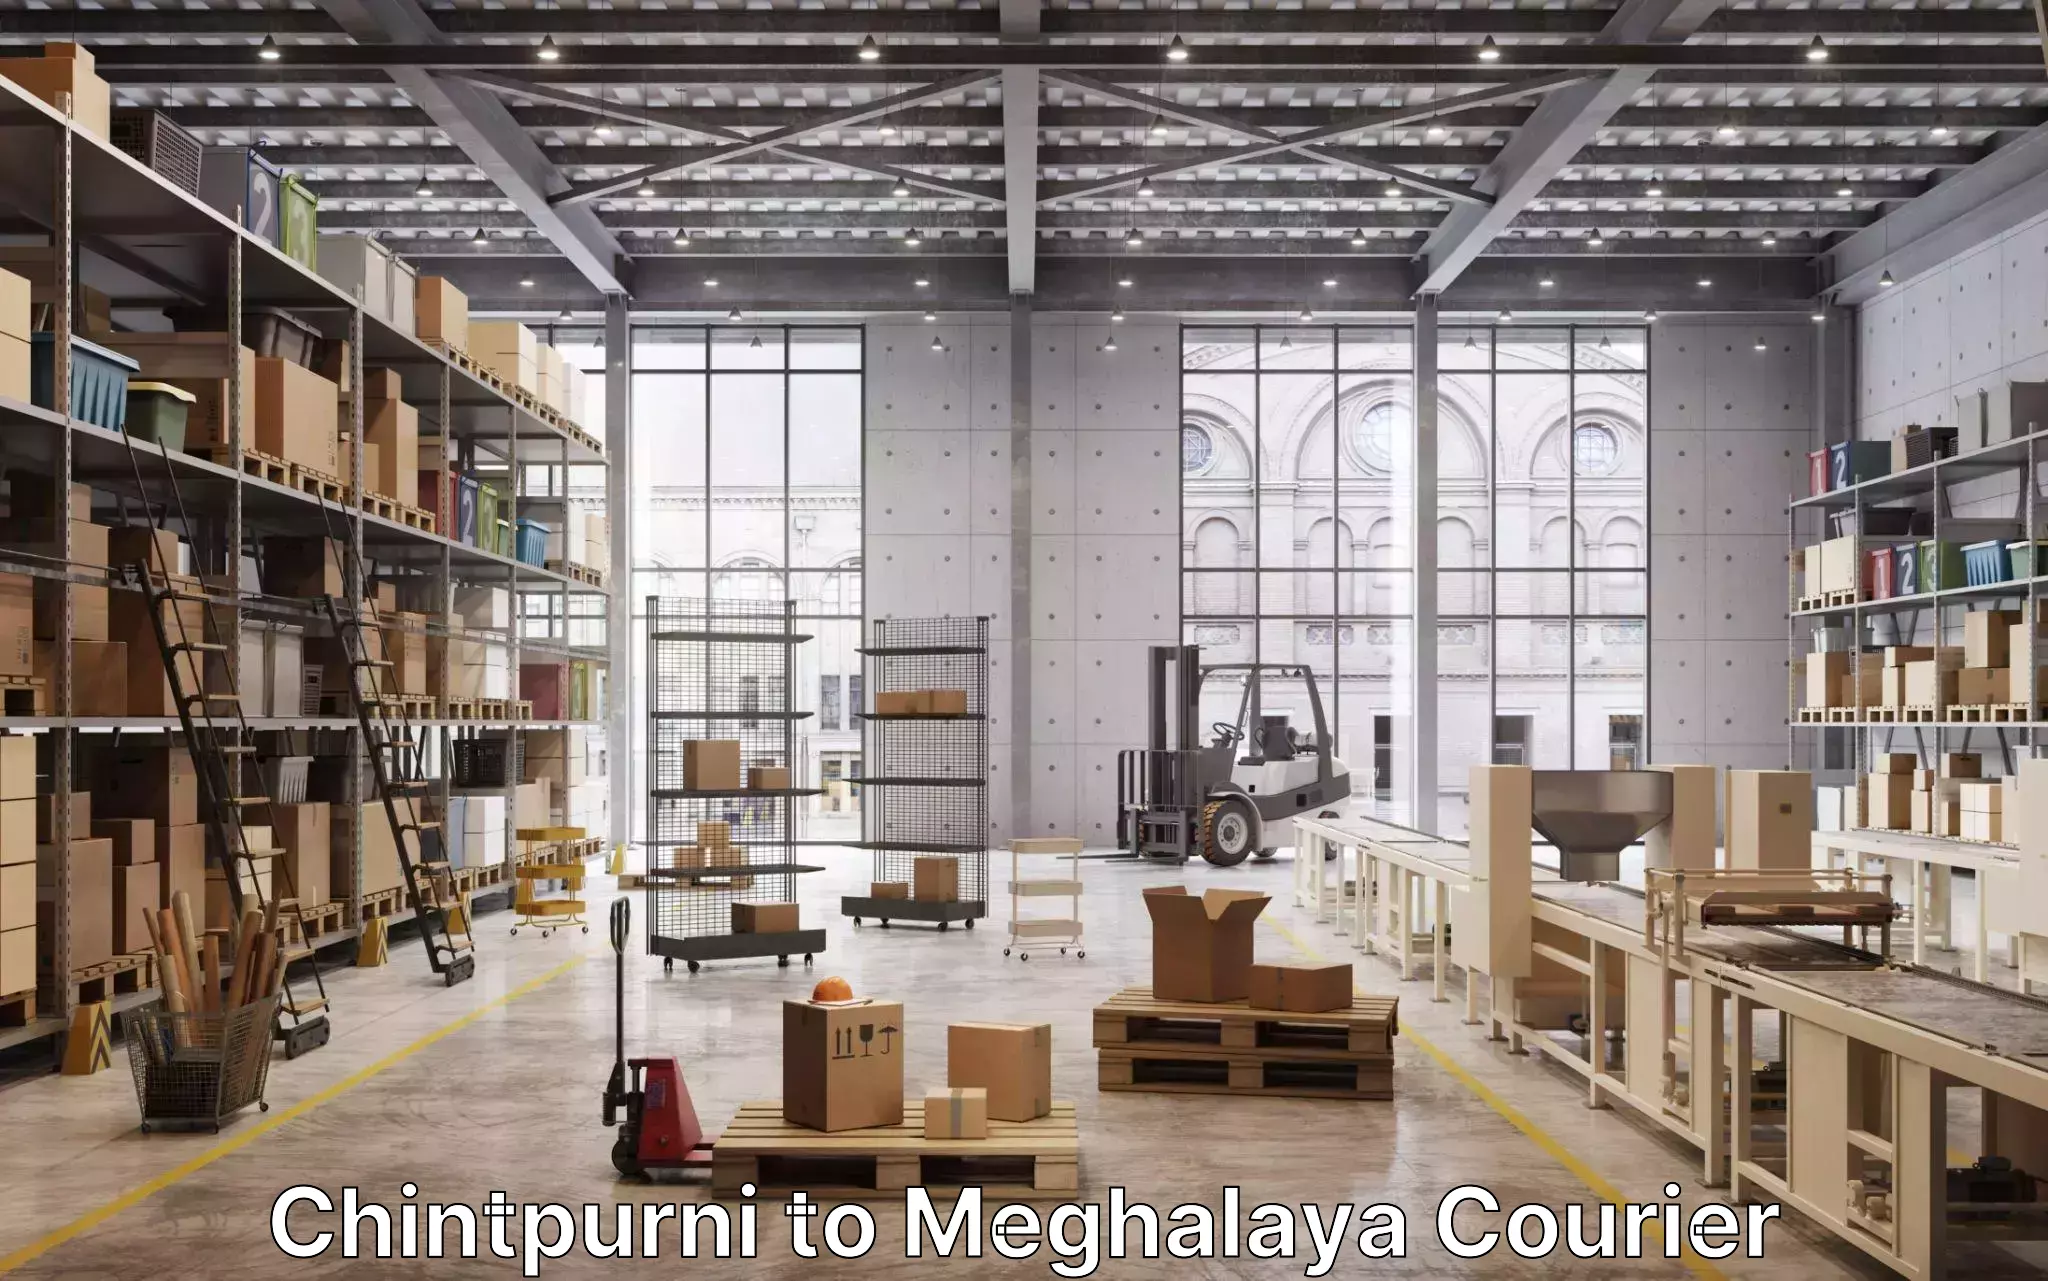 Moving and packing experts Chintpurni to Meghalaya